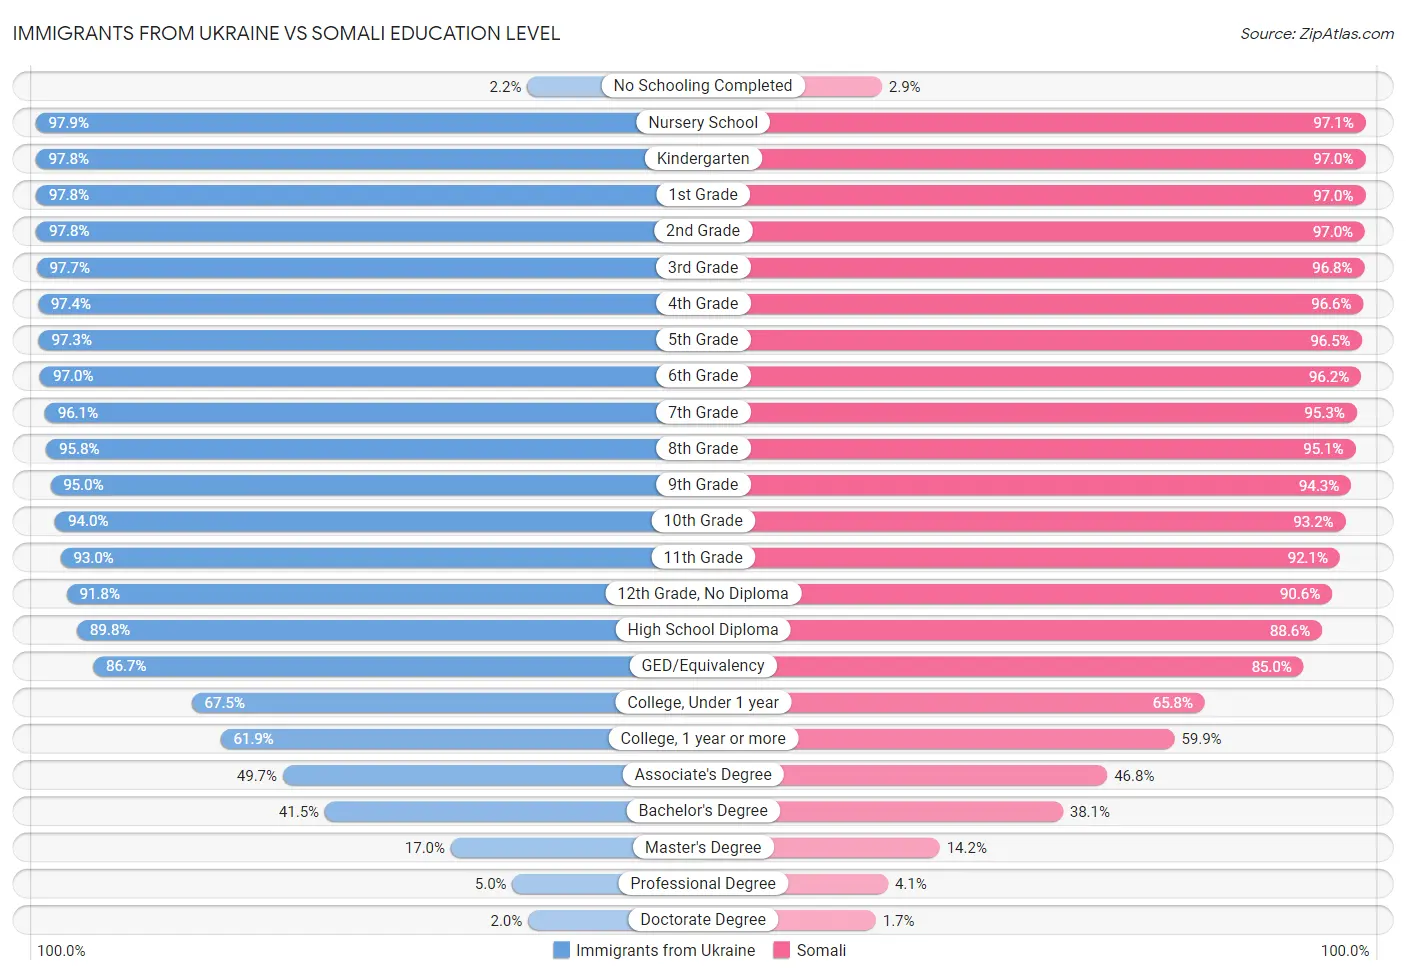 Immigrants from Ukraine vs Somali Education Level